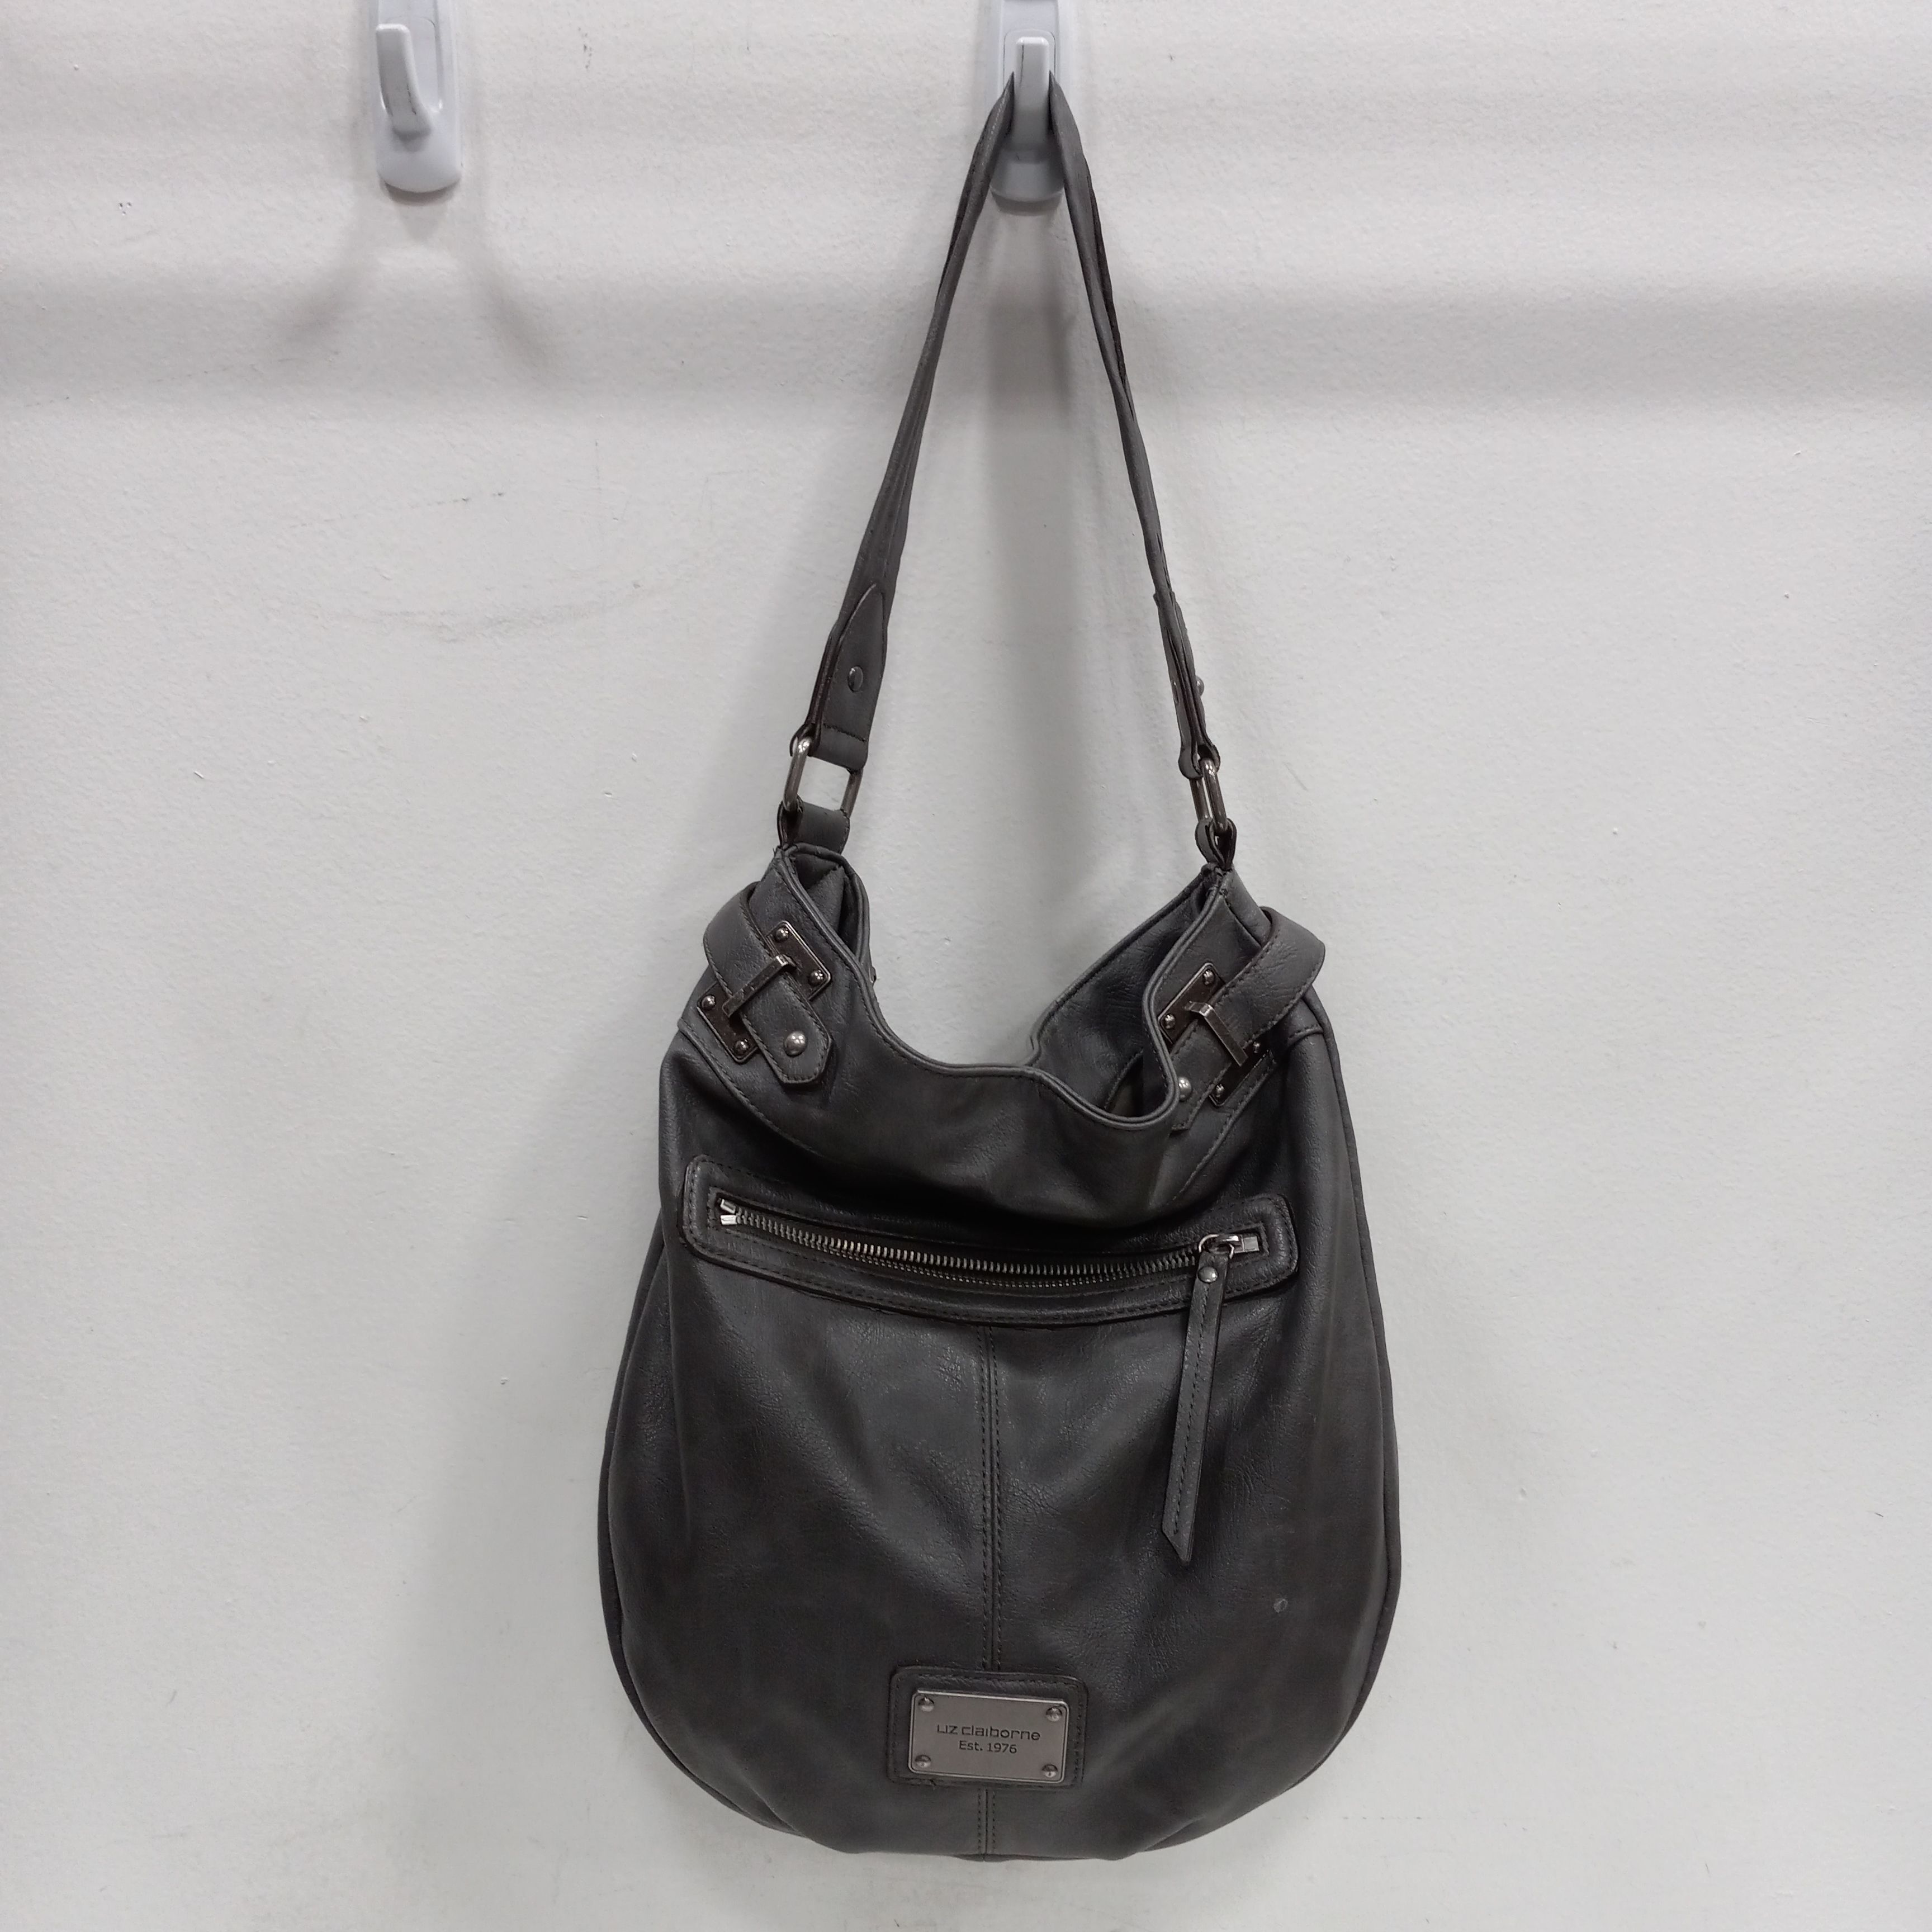 Liz Claiborne Green Leather Hobo Bag Purse | eBay